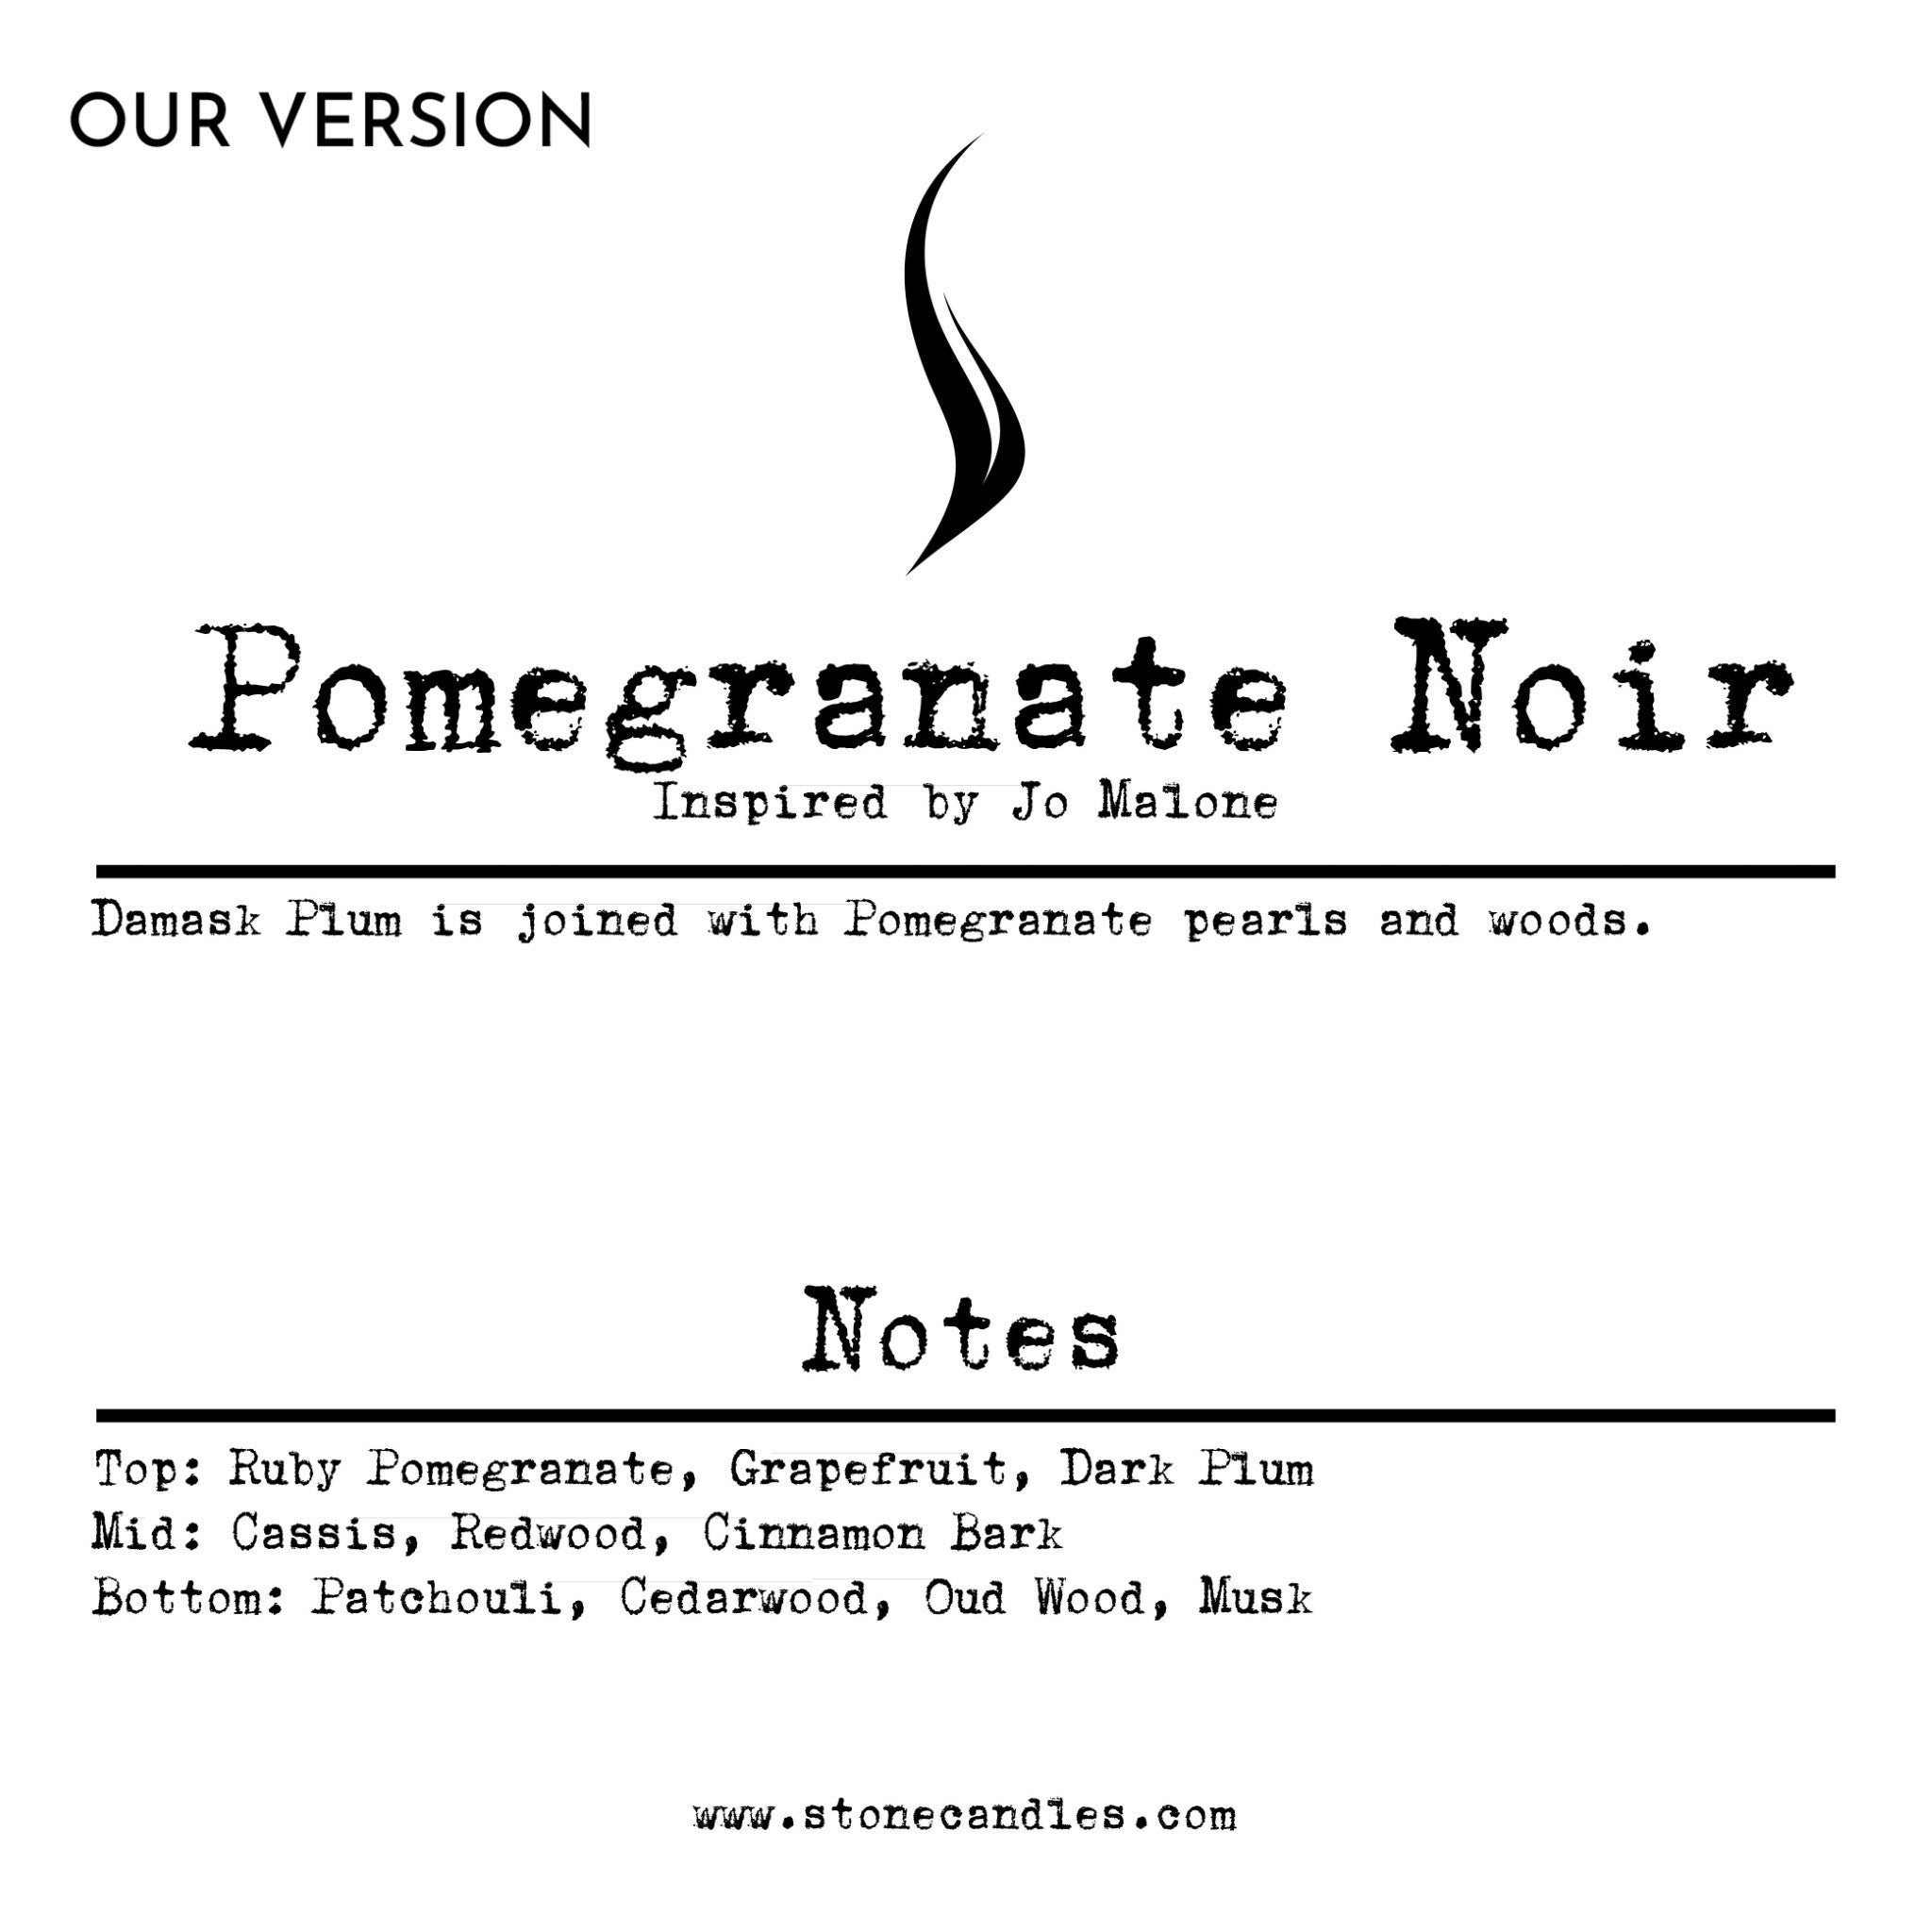 Pomegranate Noir (our version) Sample Scent Strip